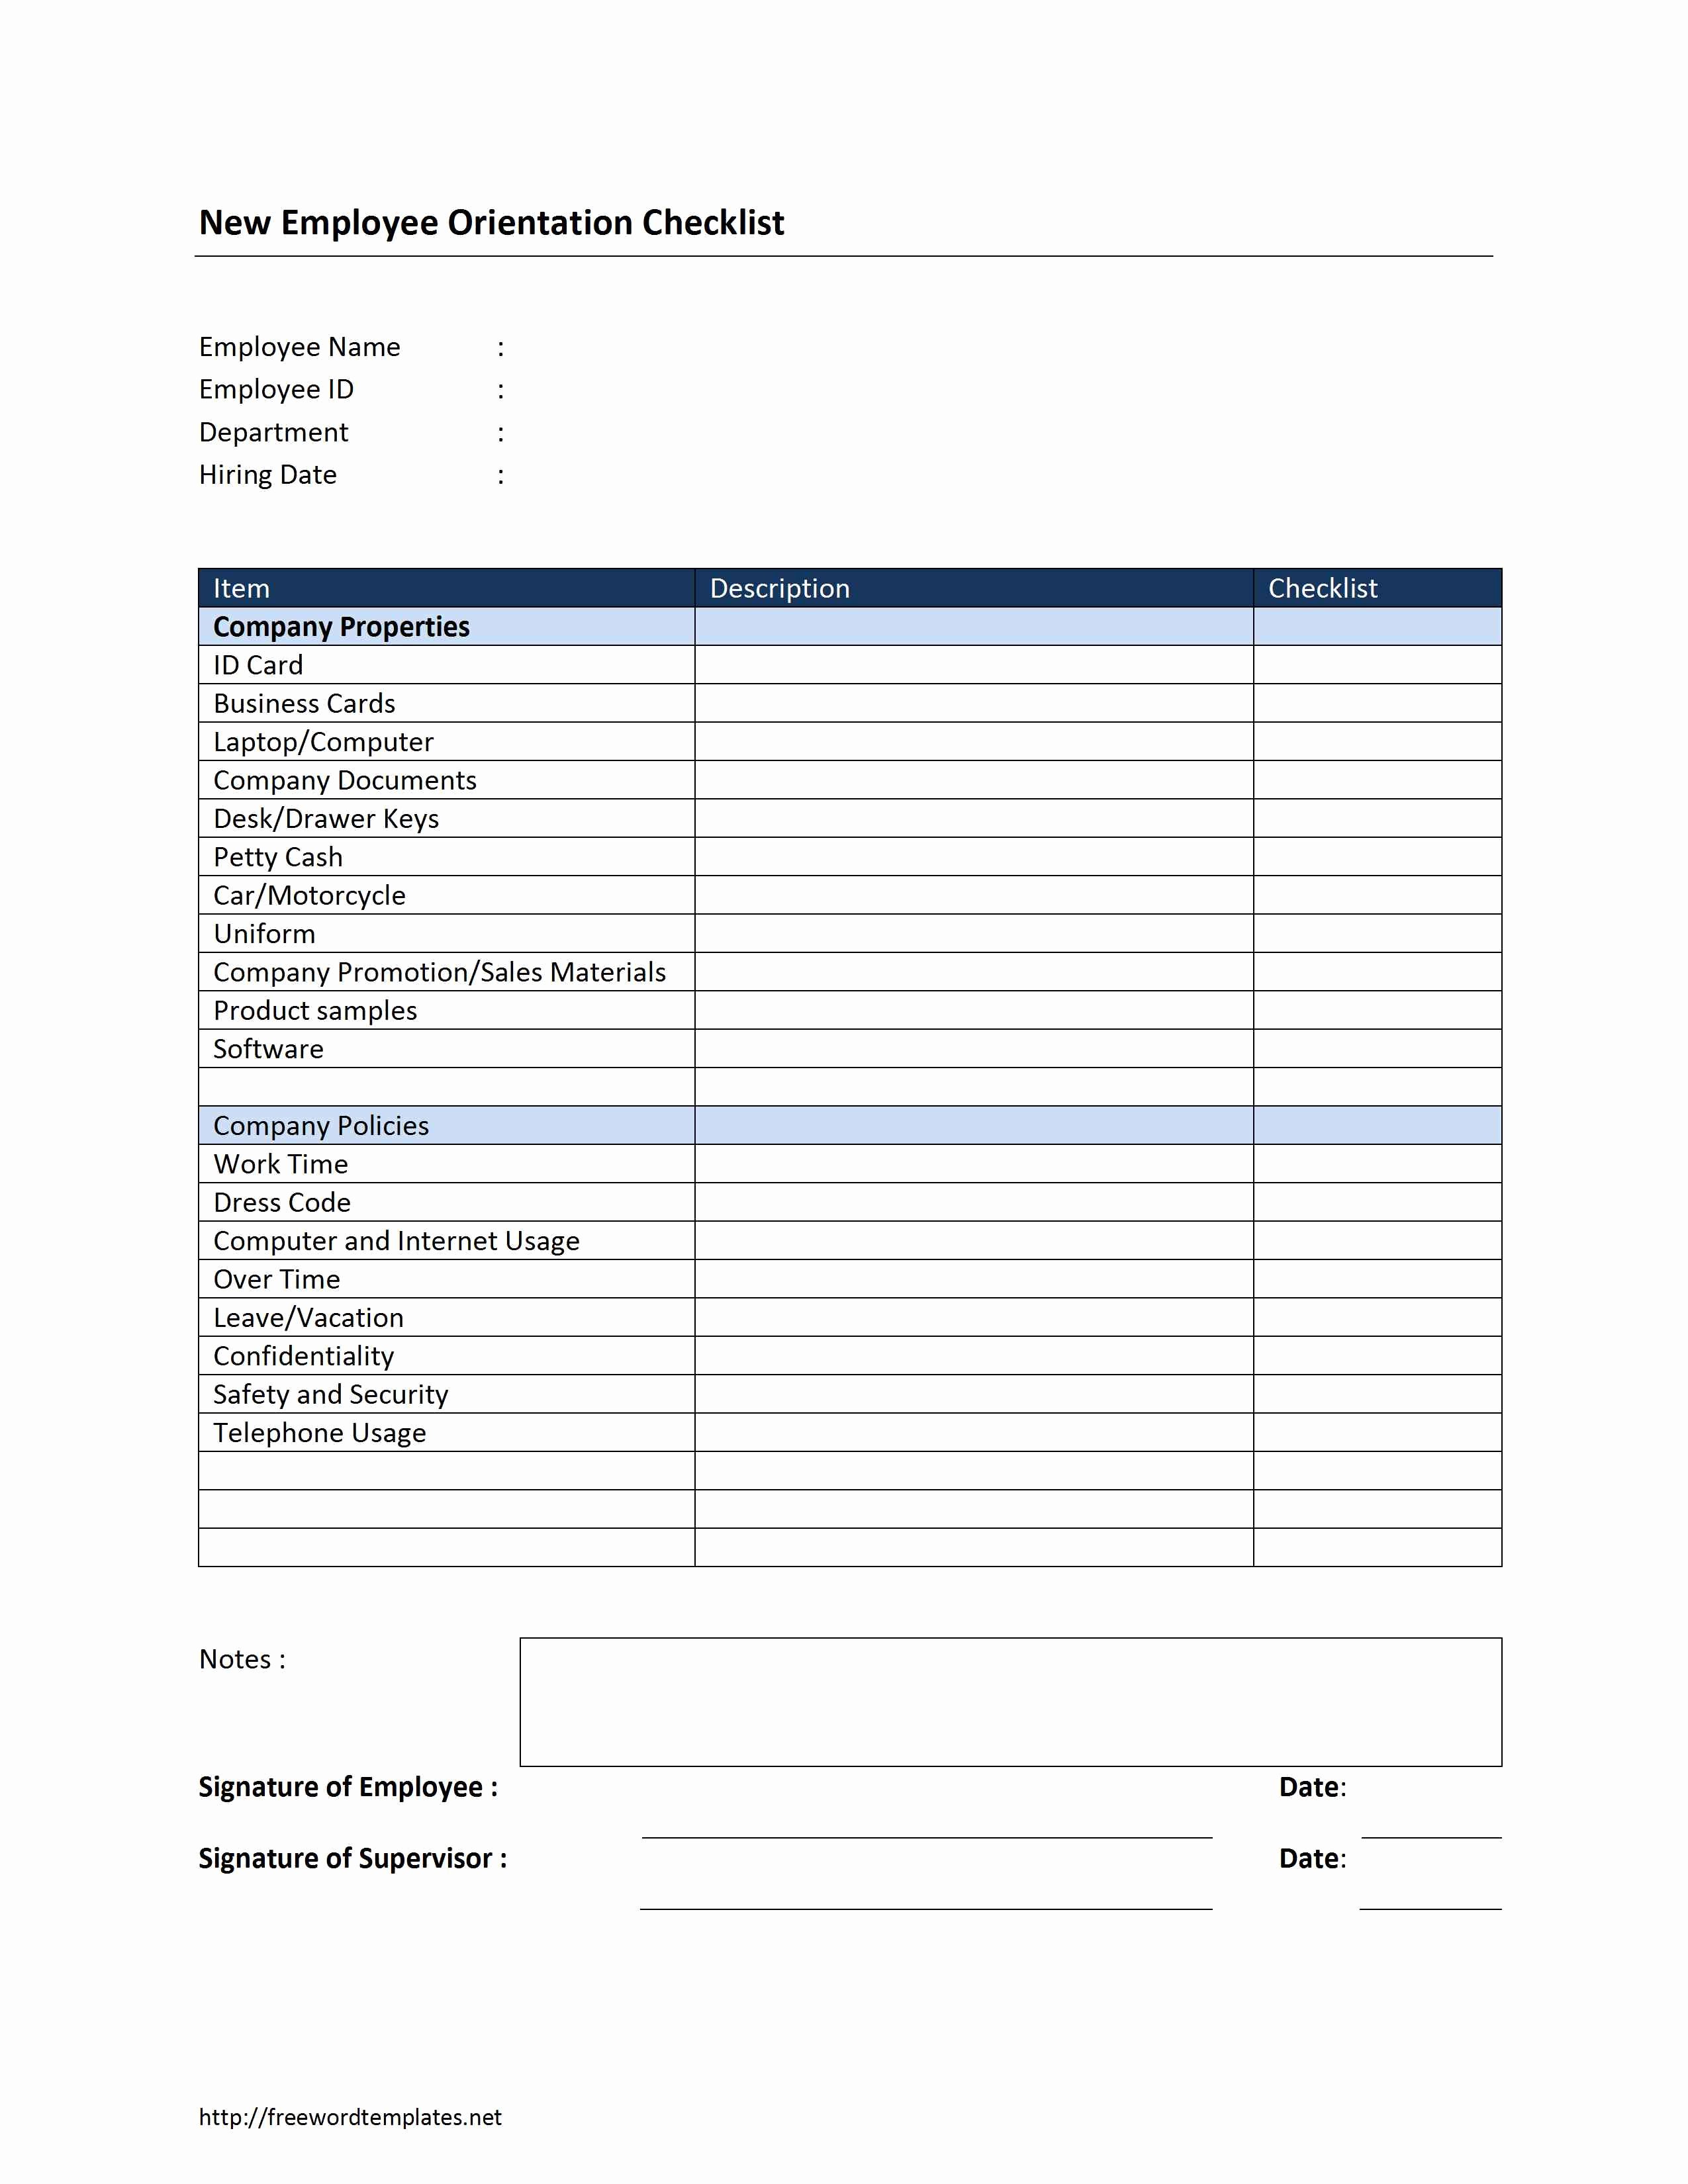 New Employee Checklist Templates Inspirational New Employee orientation Checklist Template